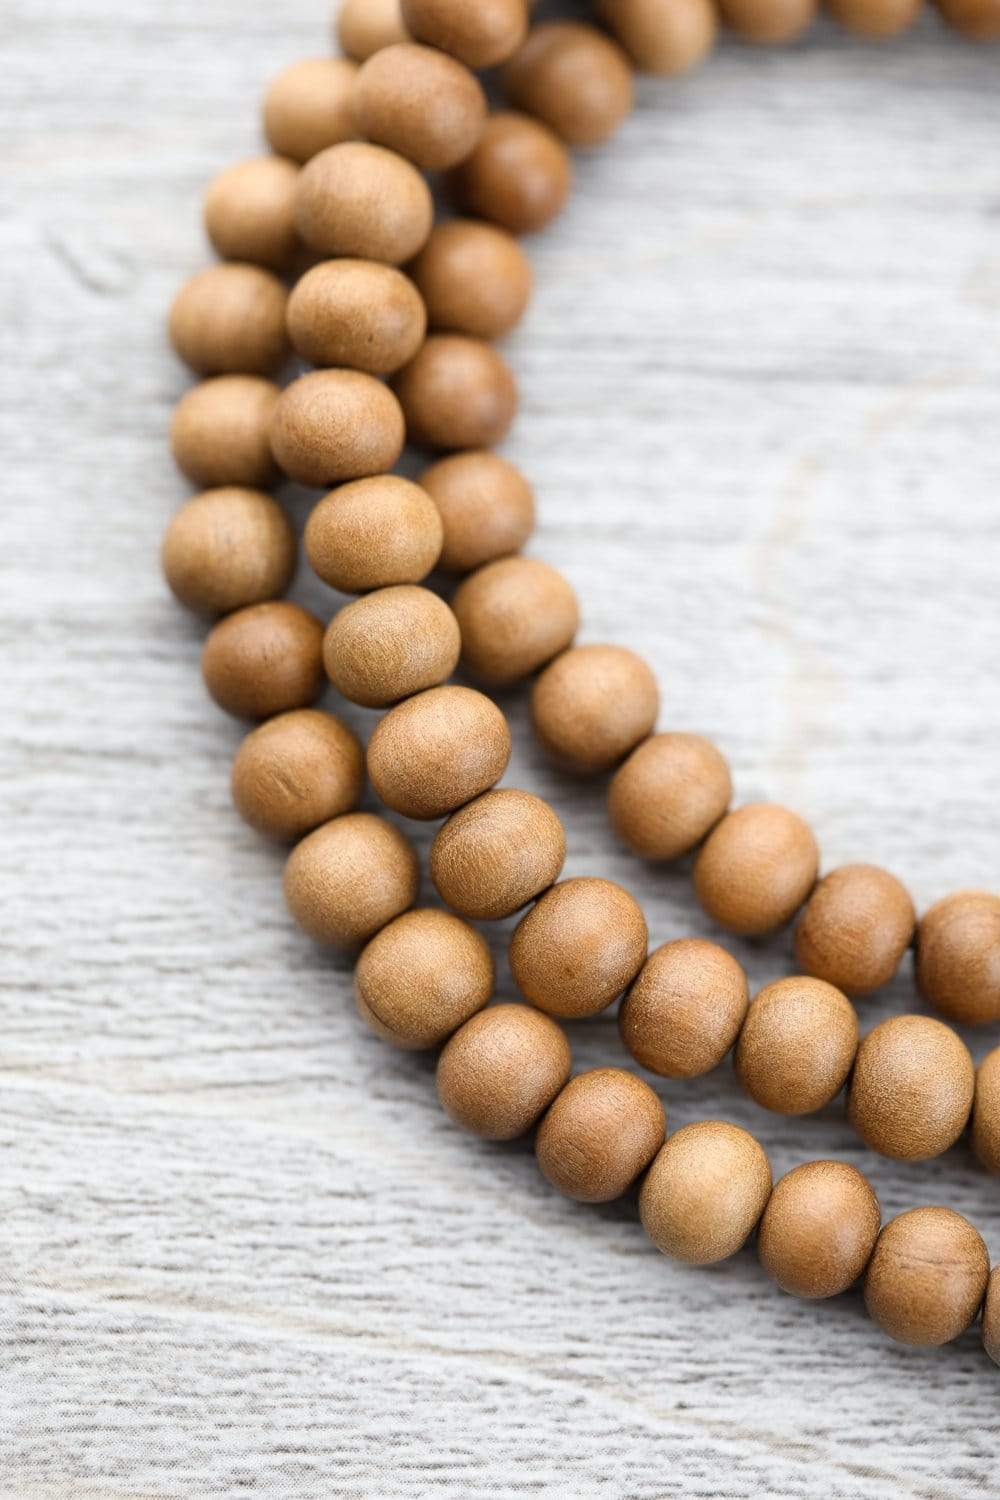 Buddhist mala in sandalwood beads (10mm)